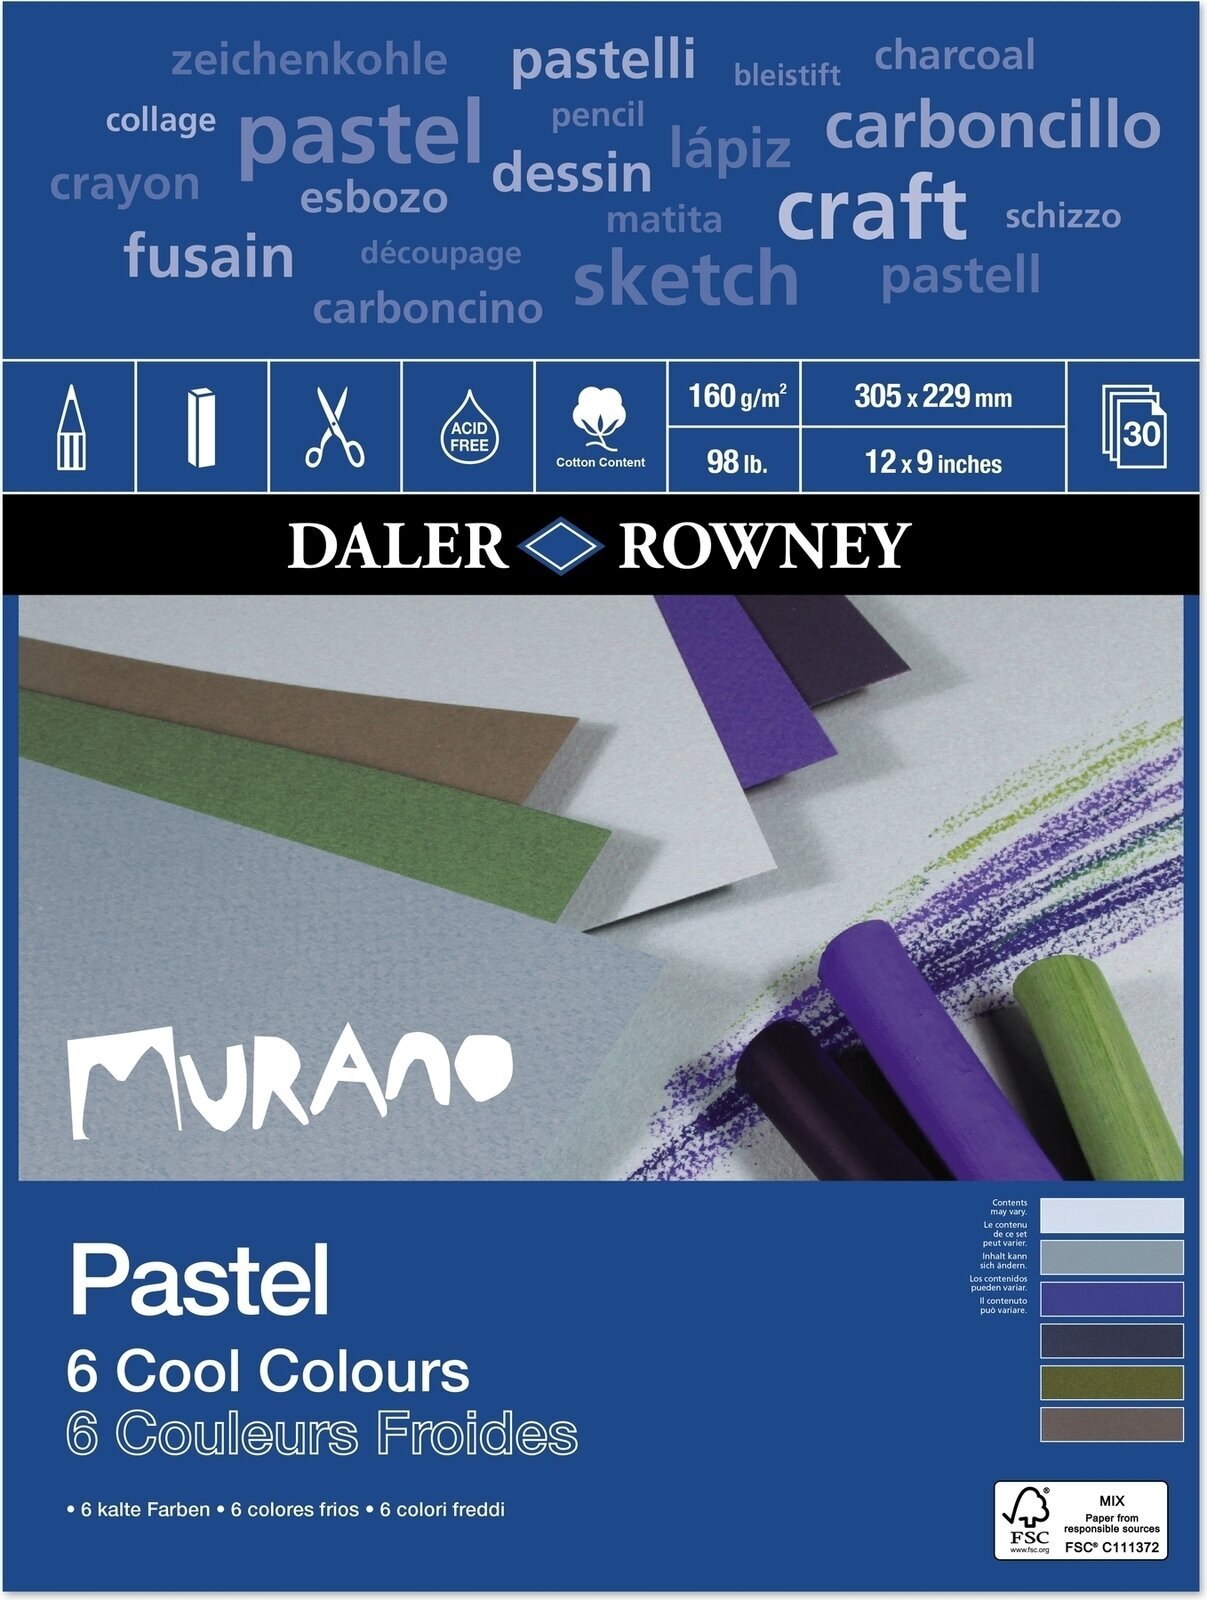 Vázlattömb Daler Rowney Murano Pastel Paper 30,5 x 22,9 cm 160 g Cool Colours Vázlattömb